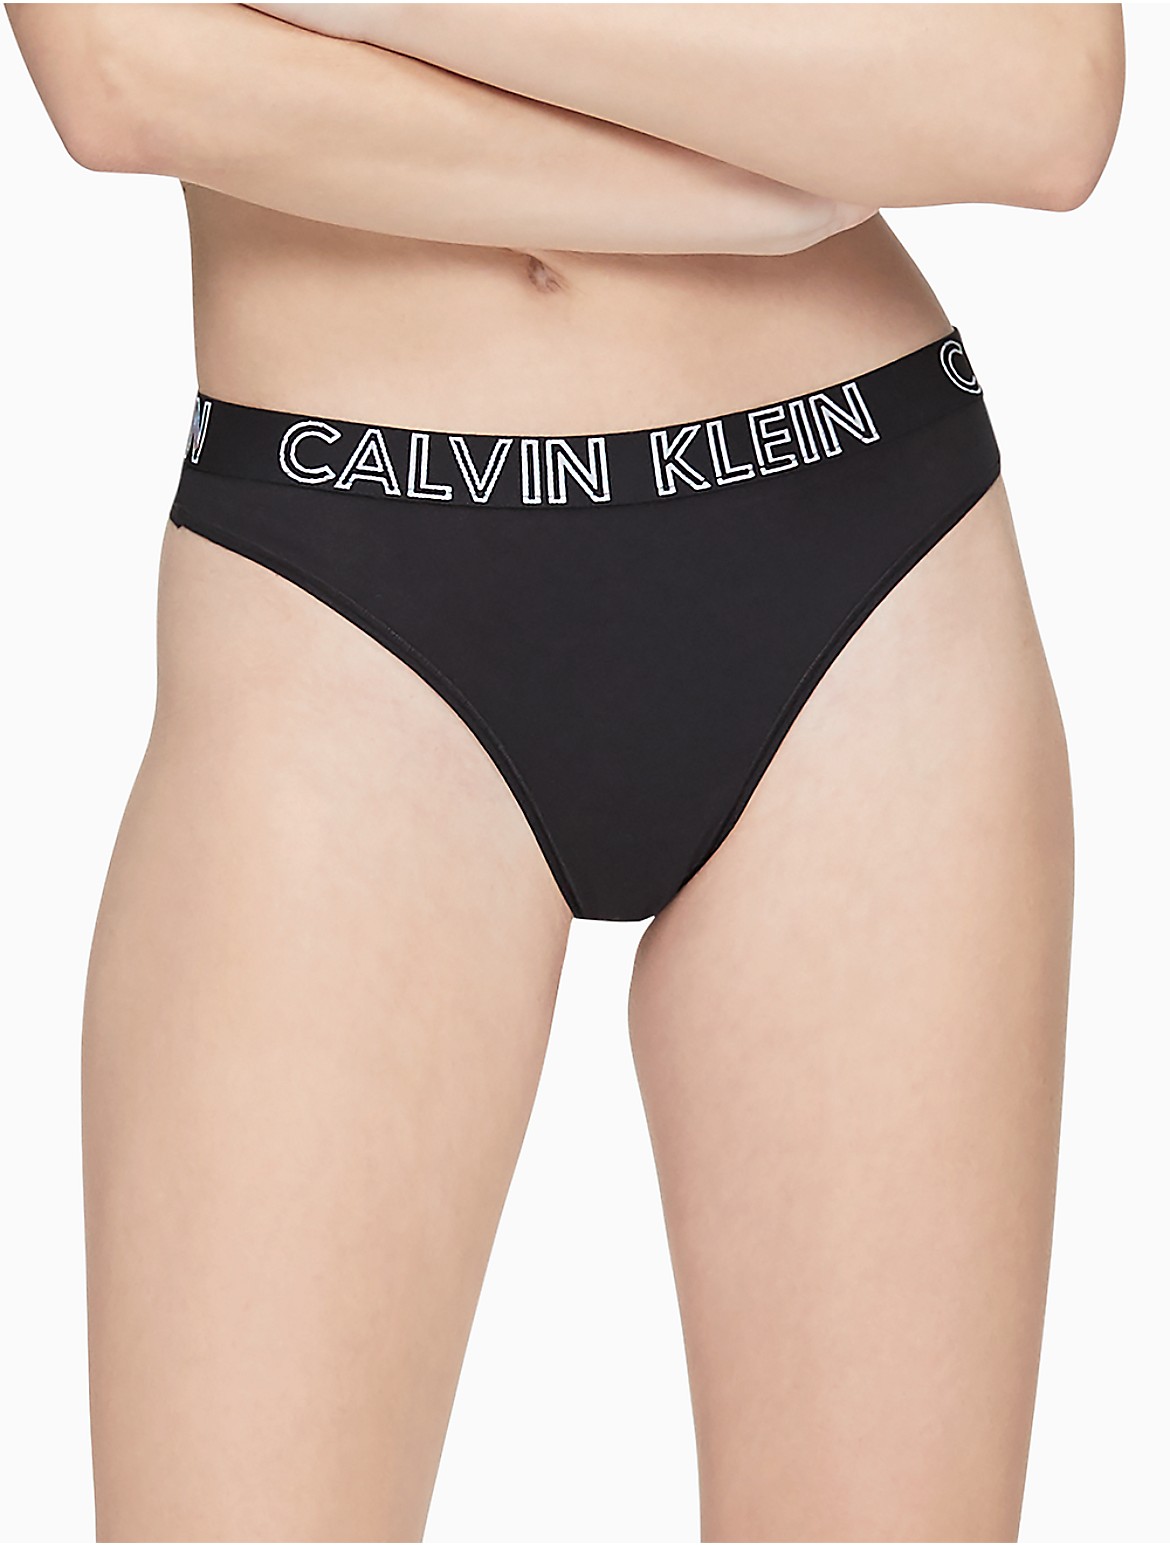 Calvin Klein Women's Ultimate Cotton Thong - Black - XS